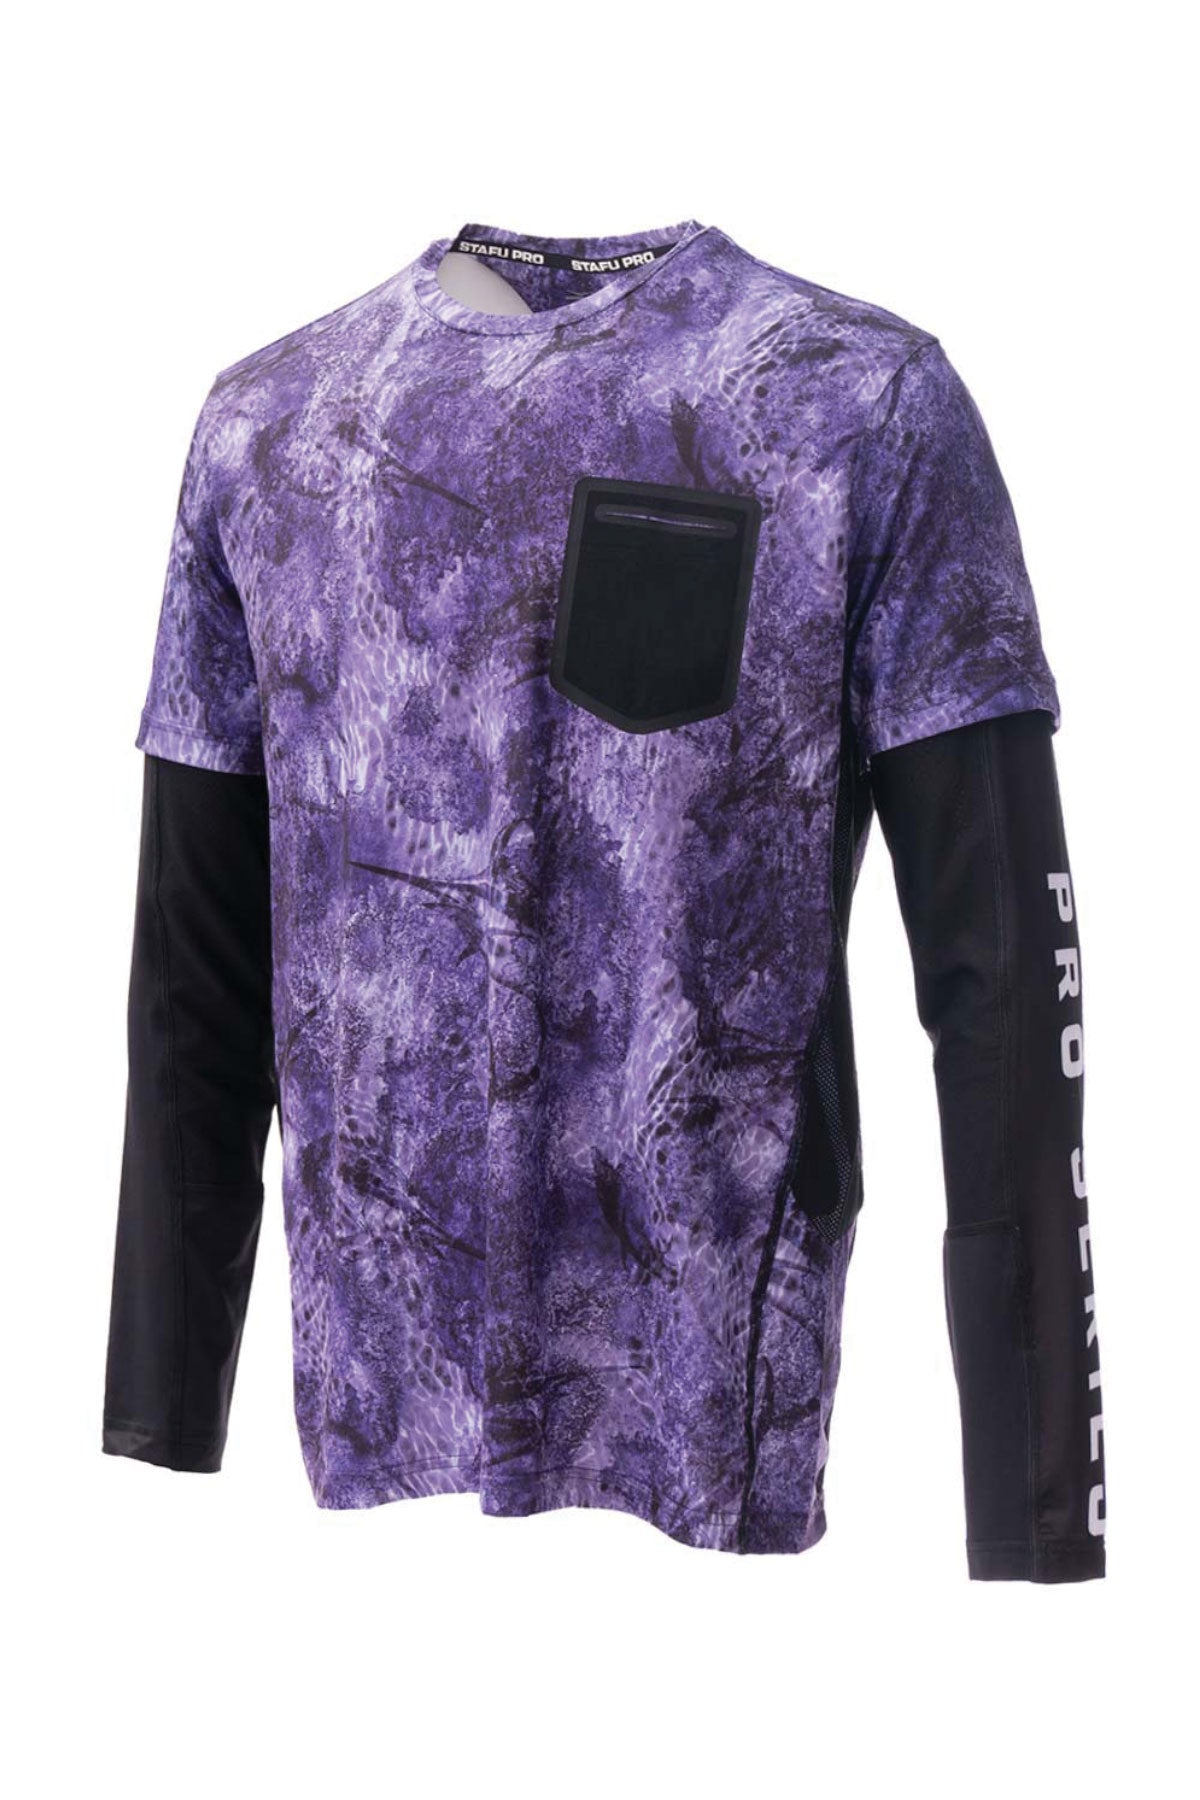 Ahoy Long and Short Sleeve Together Fishing Shirt -Marlin Mania -Purple - Stafu Pro Series